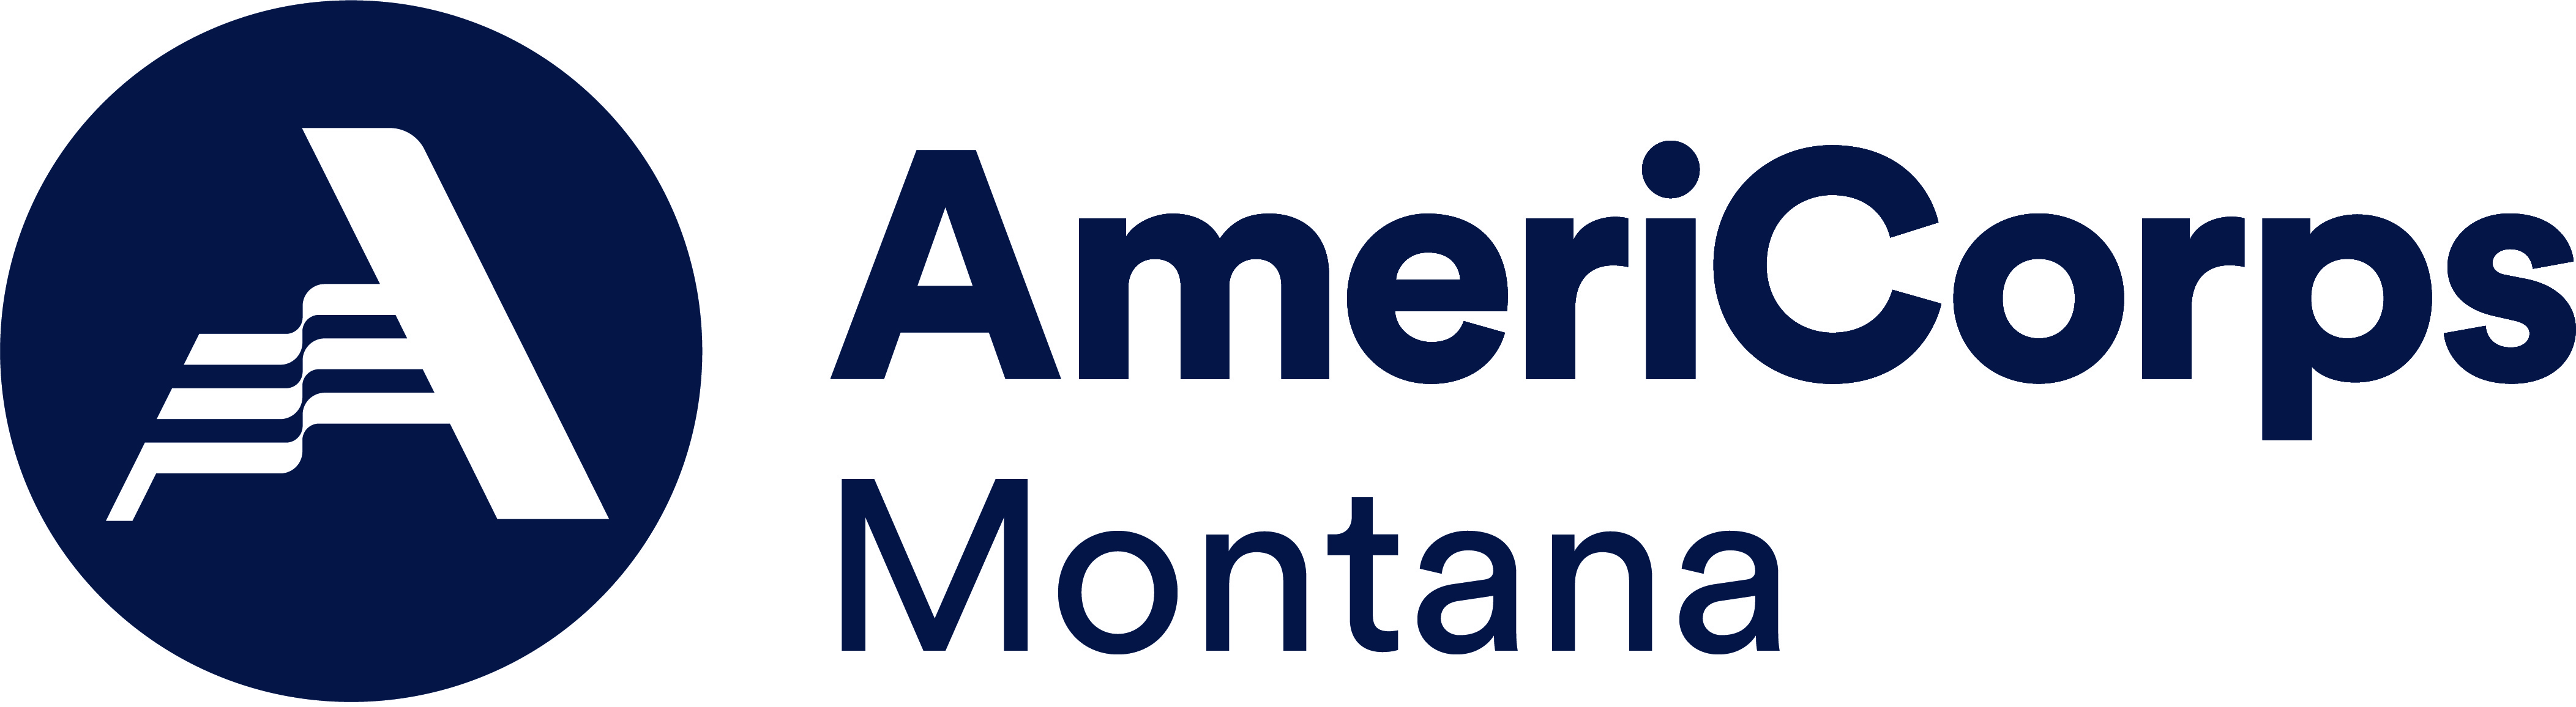 AmeriCorps Montana logo